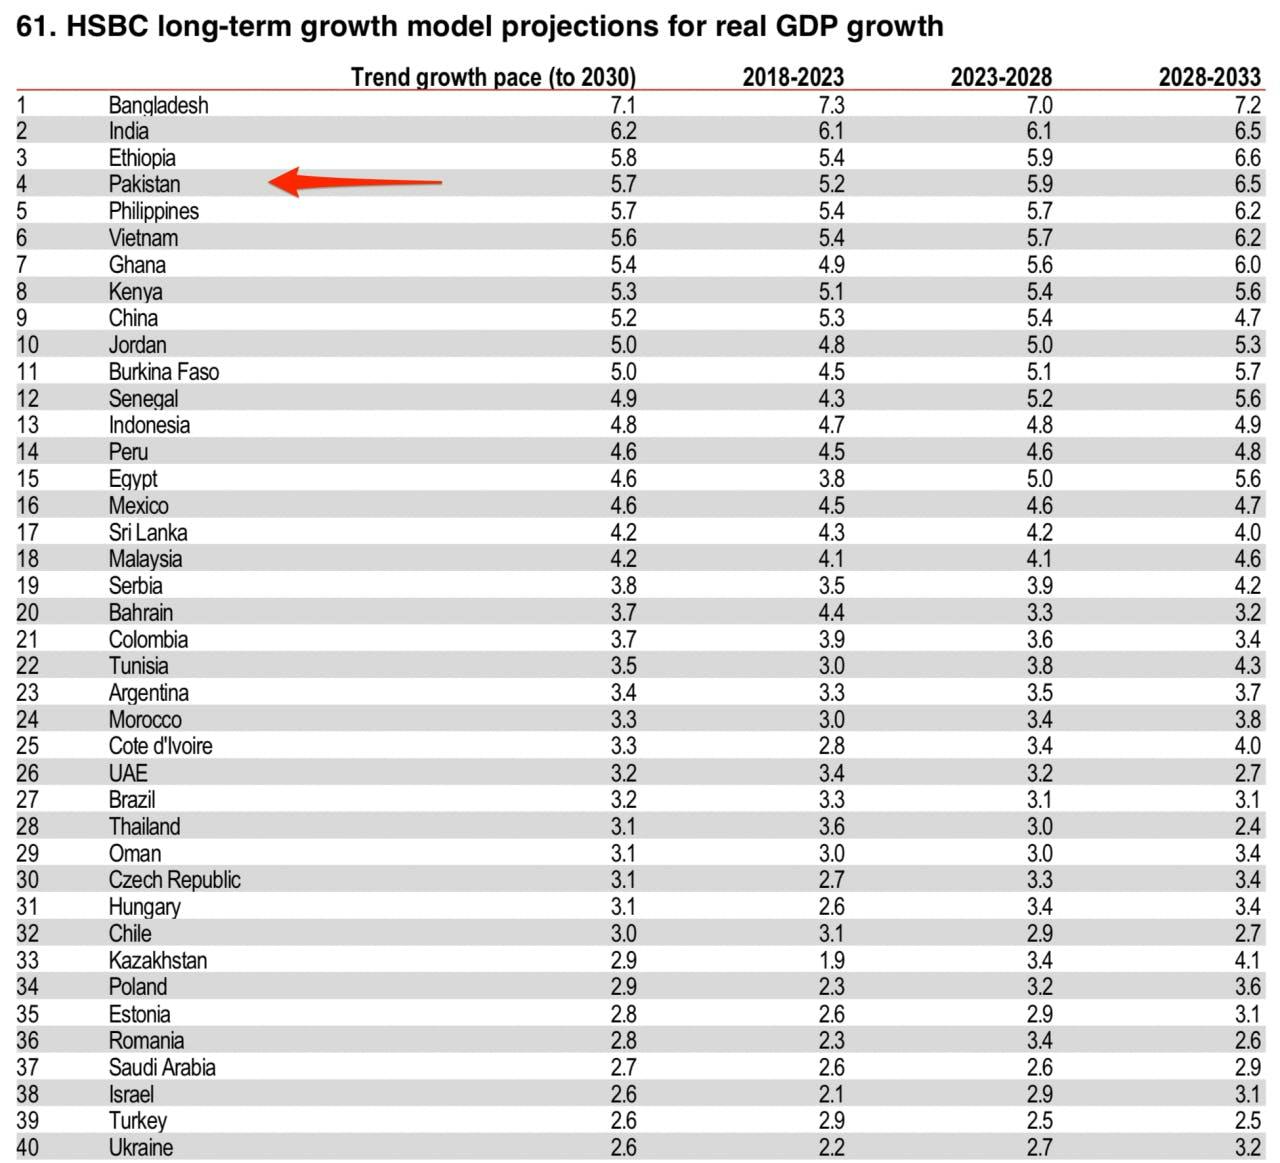 Pakistan is world’s 4th fastest growing economy: HSBC